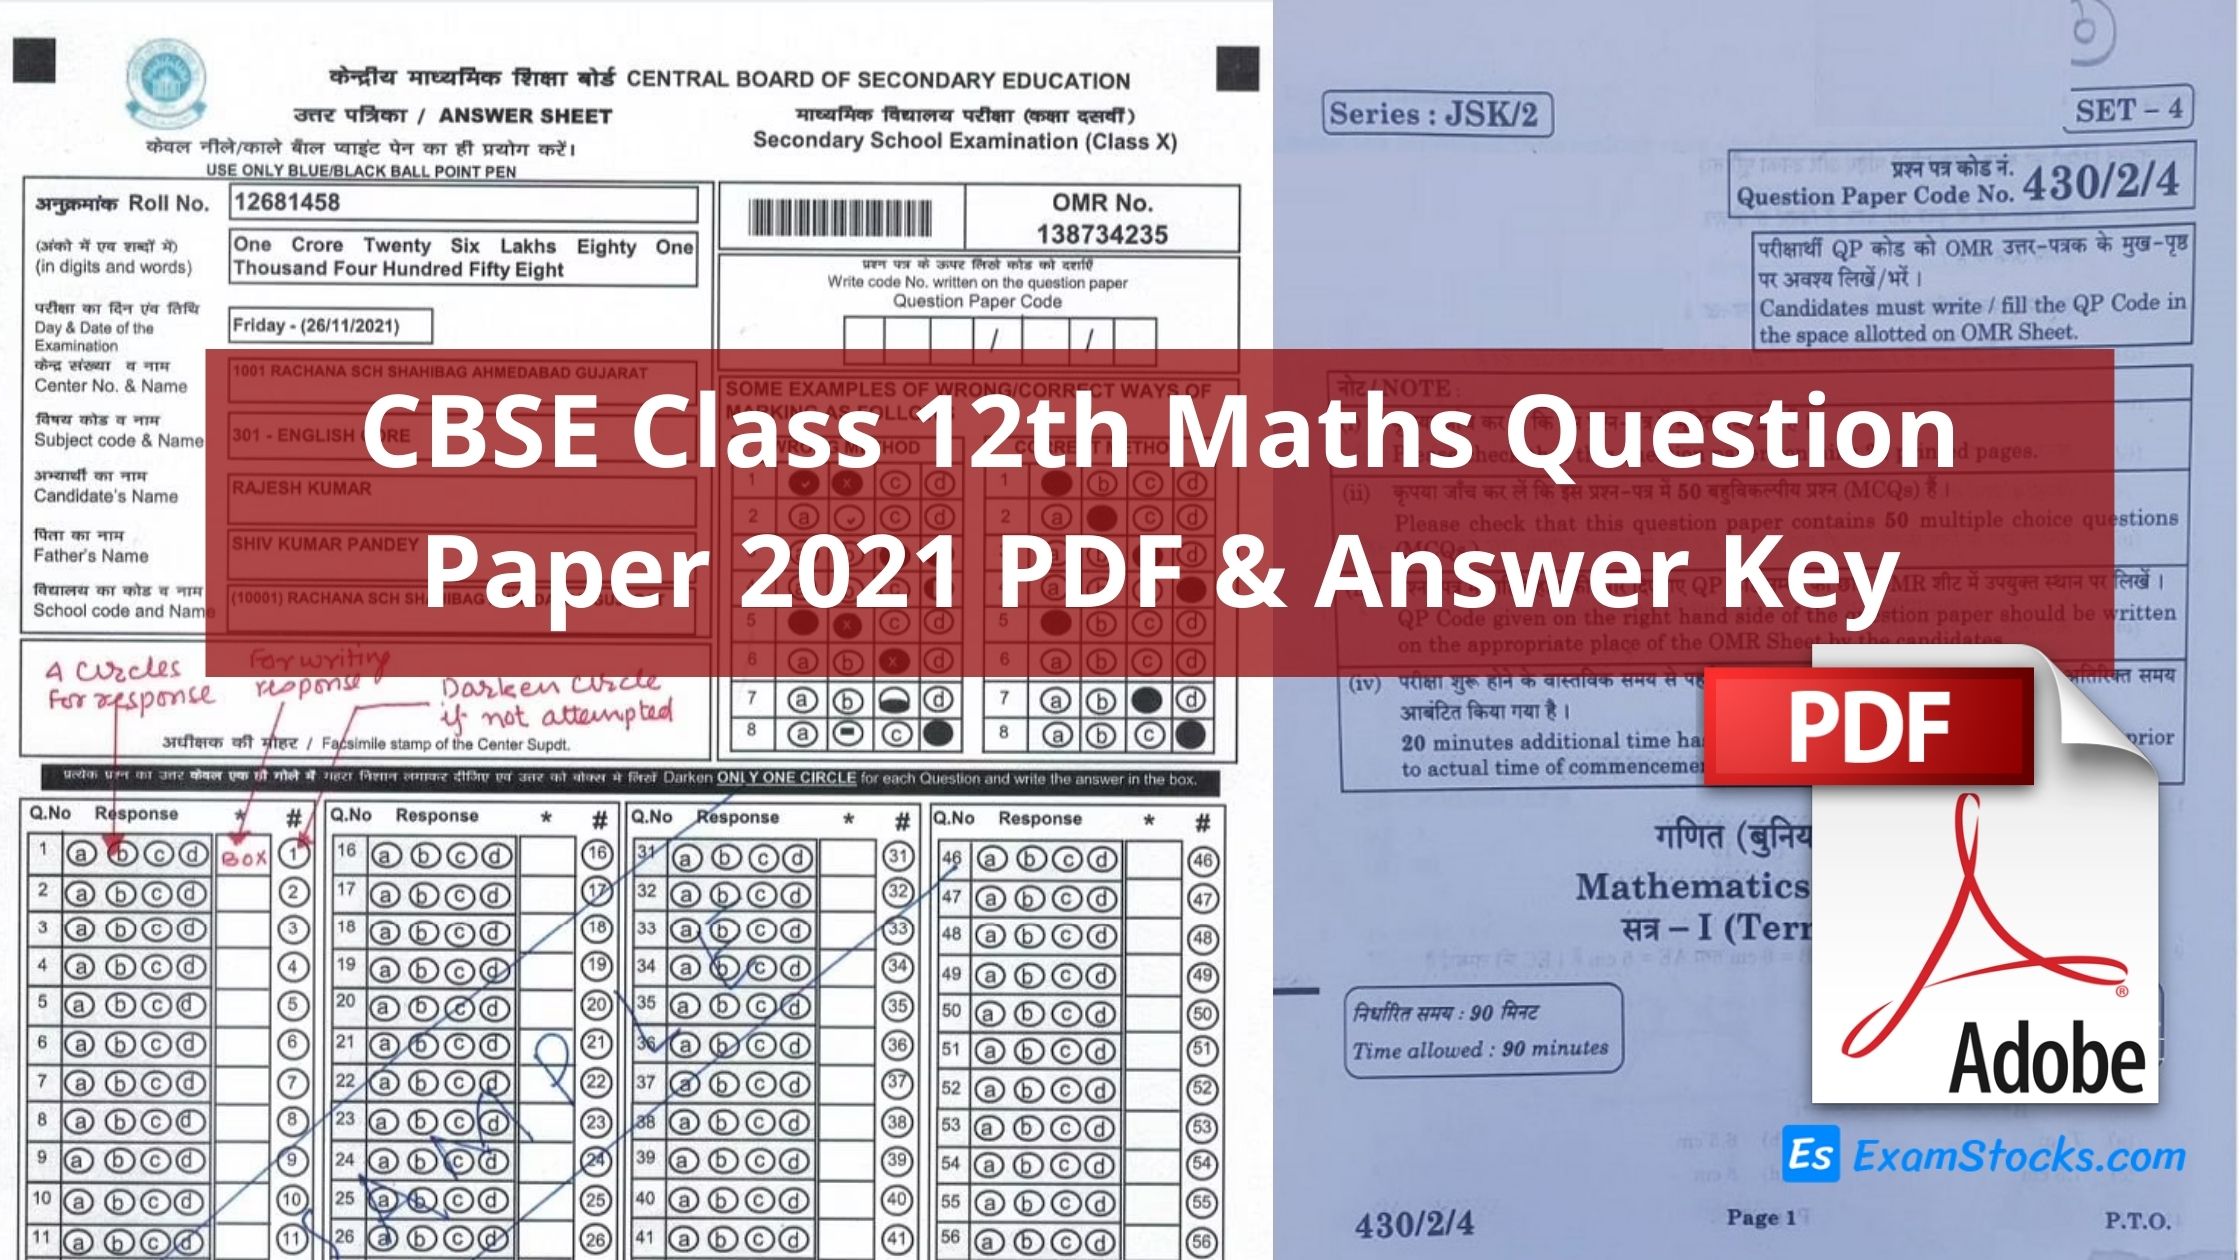 CBSE Class 12th Maths Question Paper 2021 PDF & Answer Key